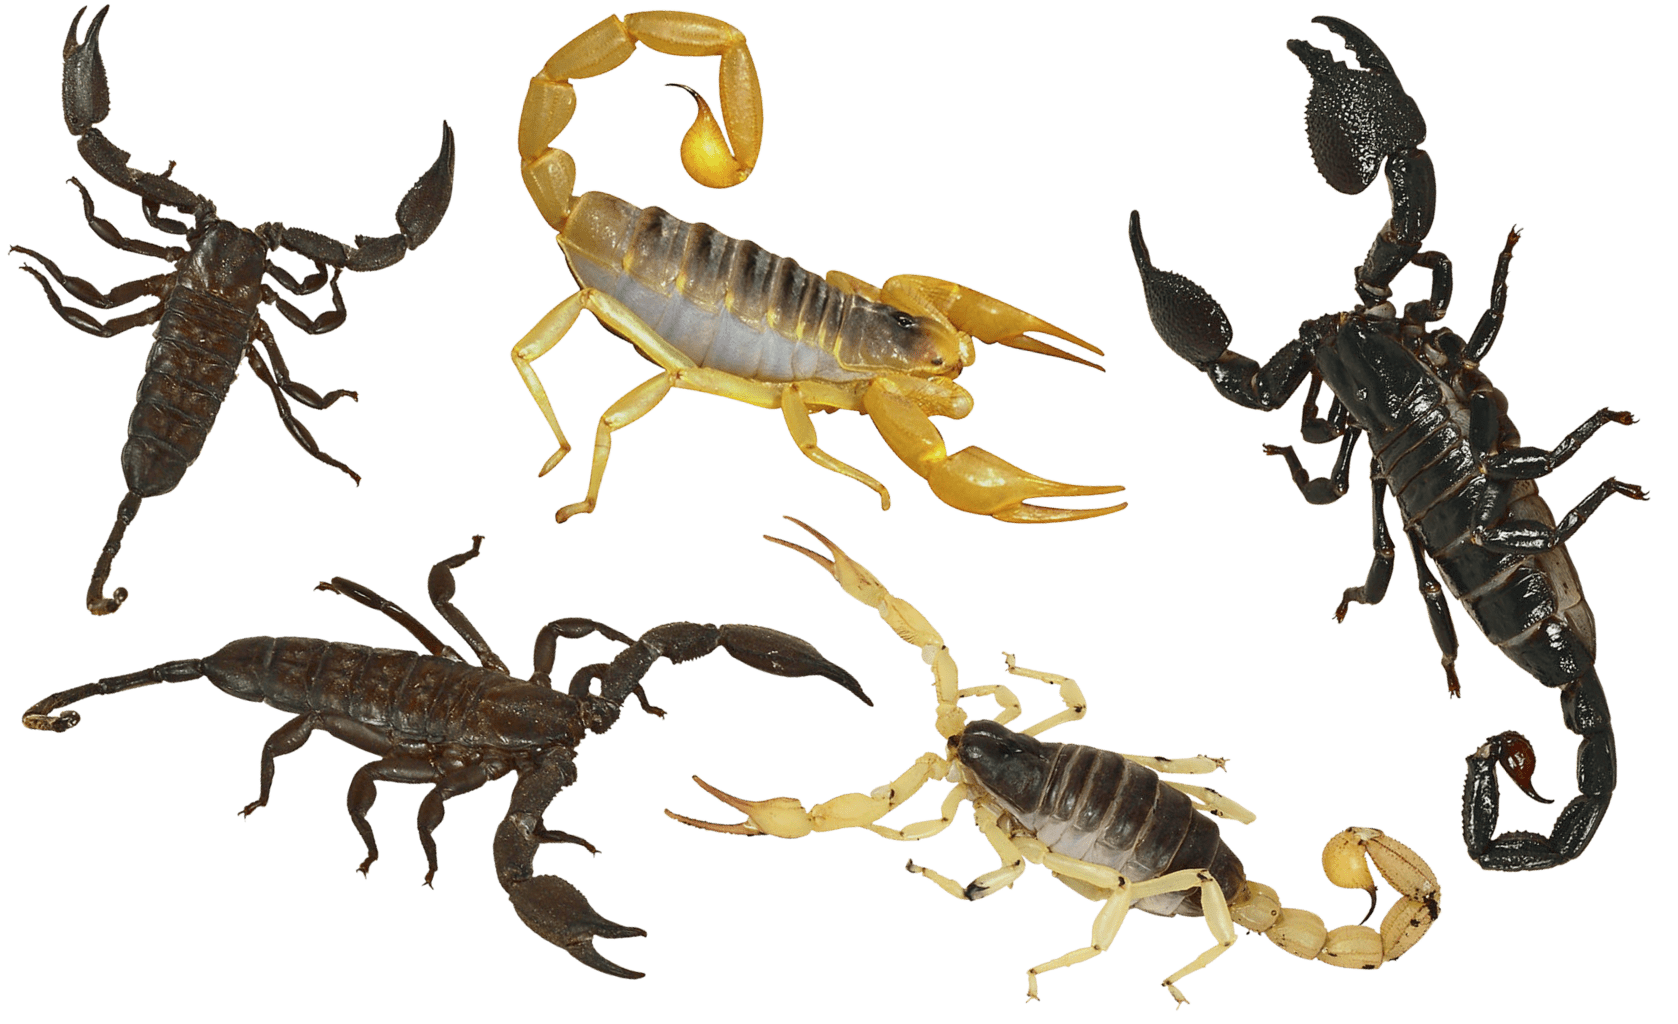 scorpion, arthropods, poisonous